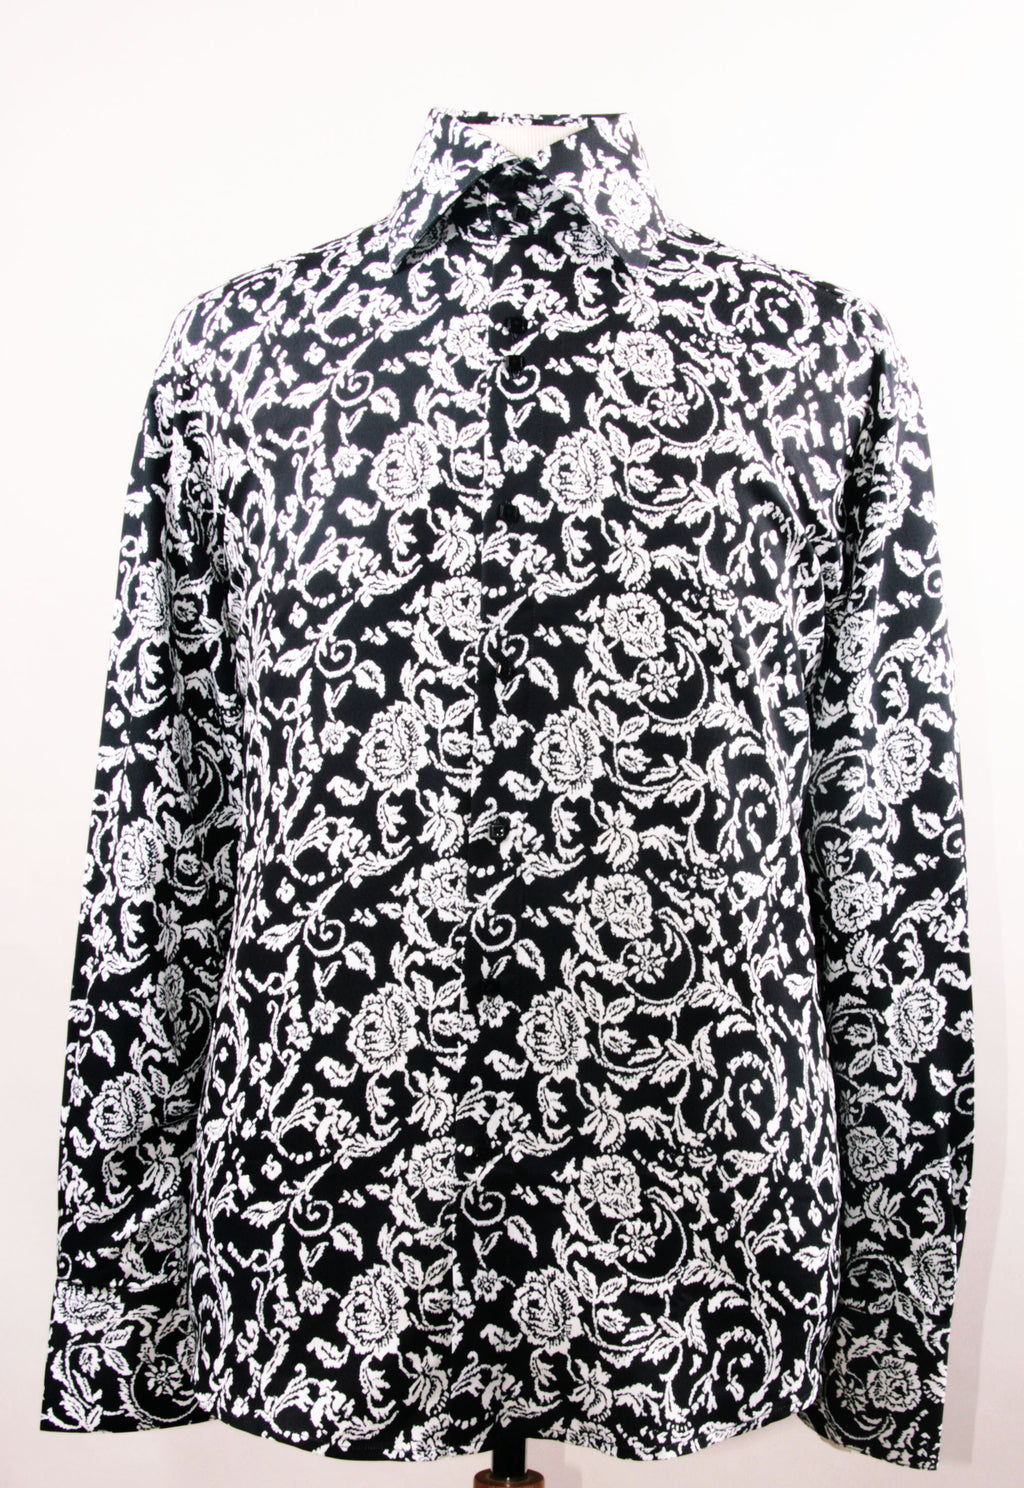 Dress Shirt Regular Fit Paisley Pattern In Black/White | Men's Fashion